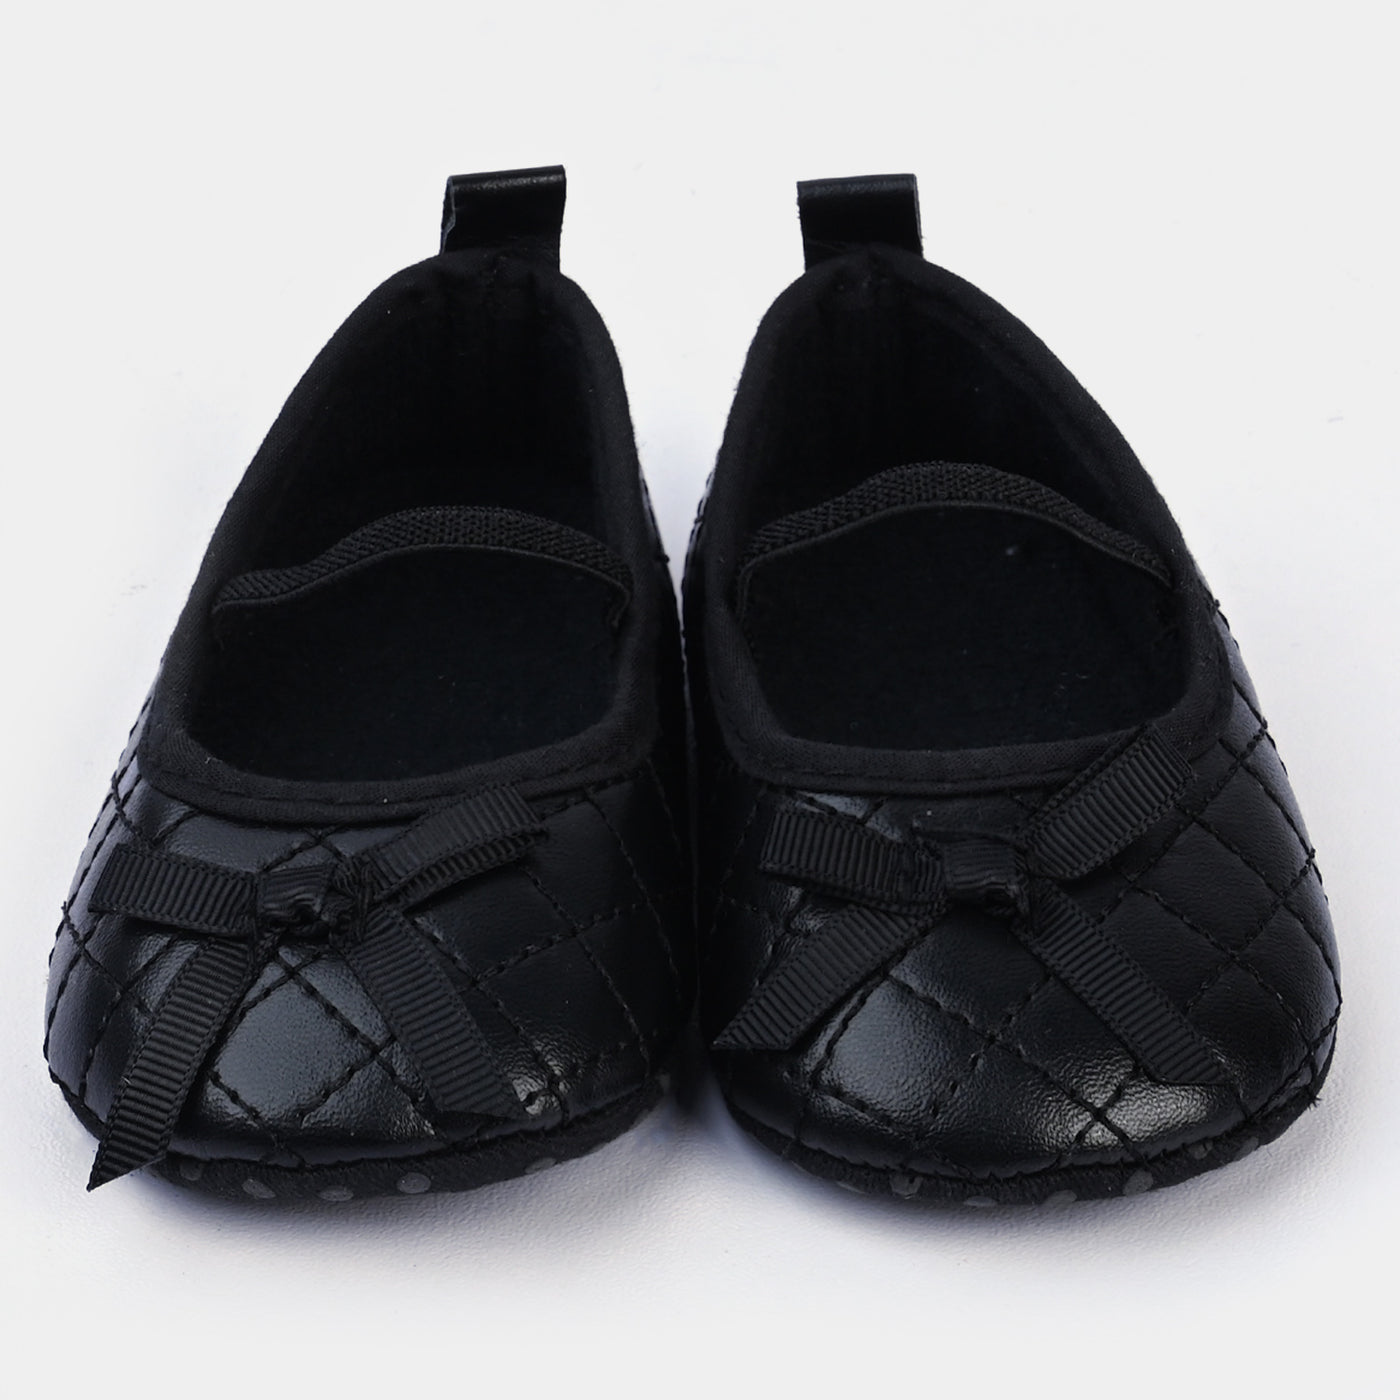 Baby Girls Shoes G12-BLACK